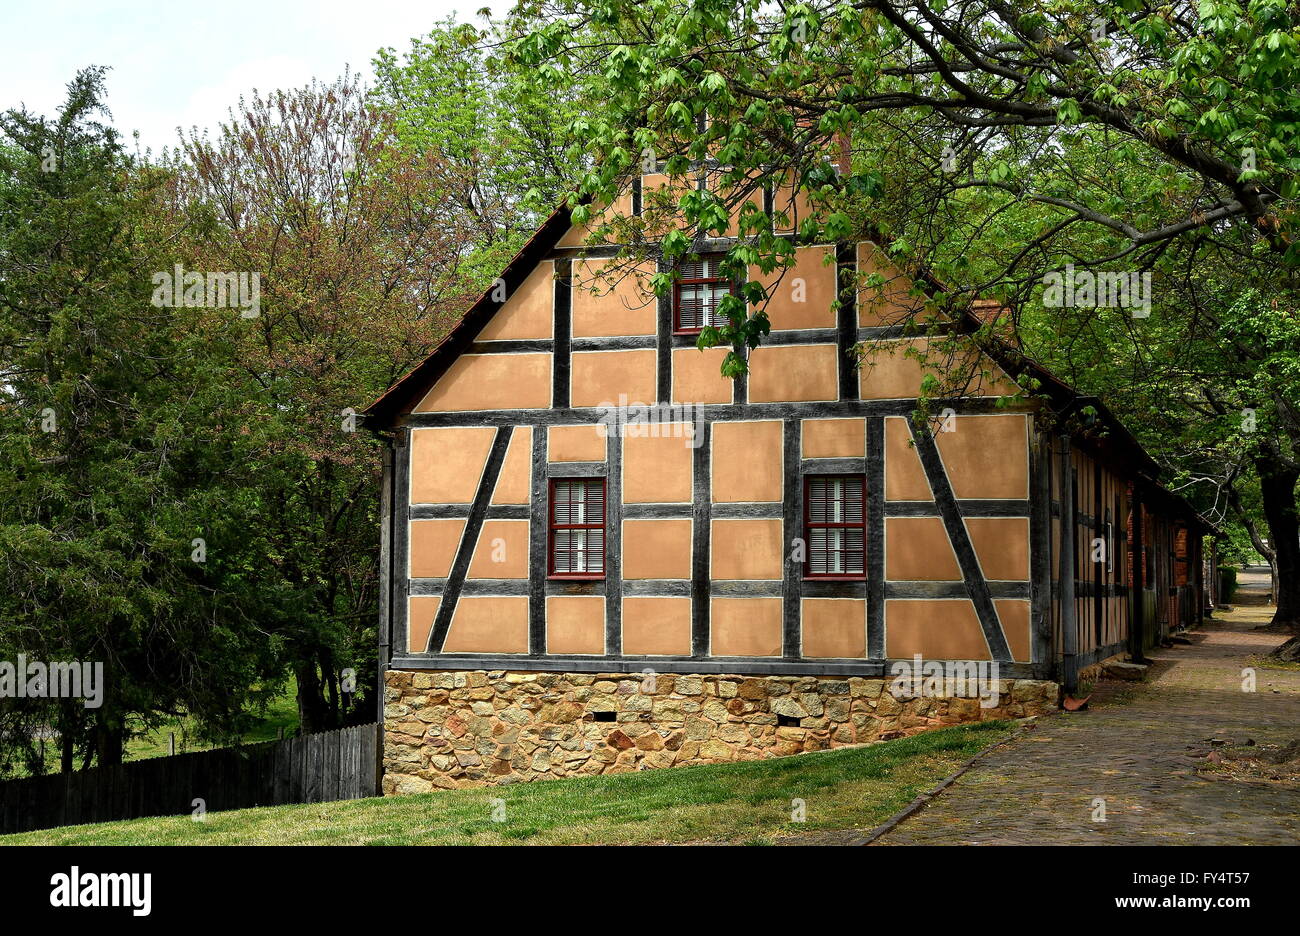 Old Salem, North Carolina:  Fachwerk stucco and half-timber 18th century Moravian houses on Main Street Stock Photo